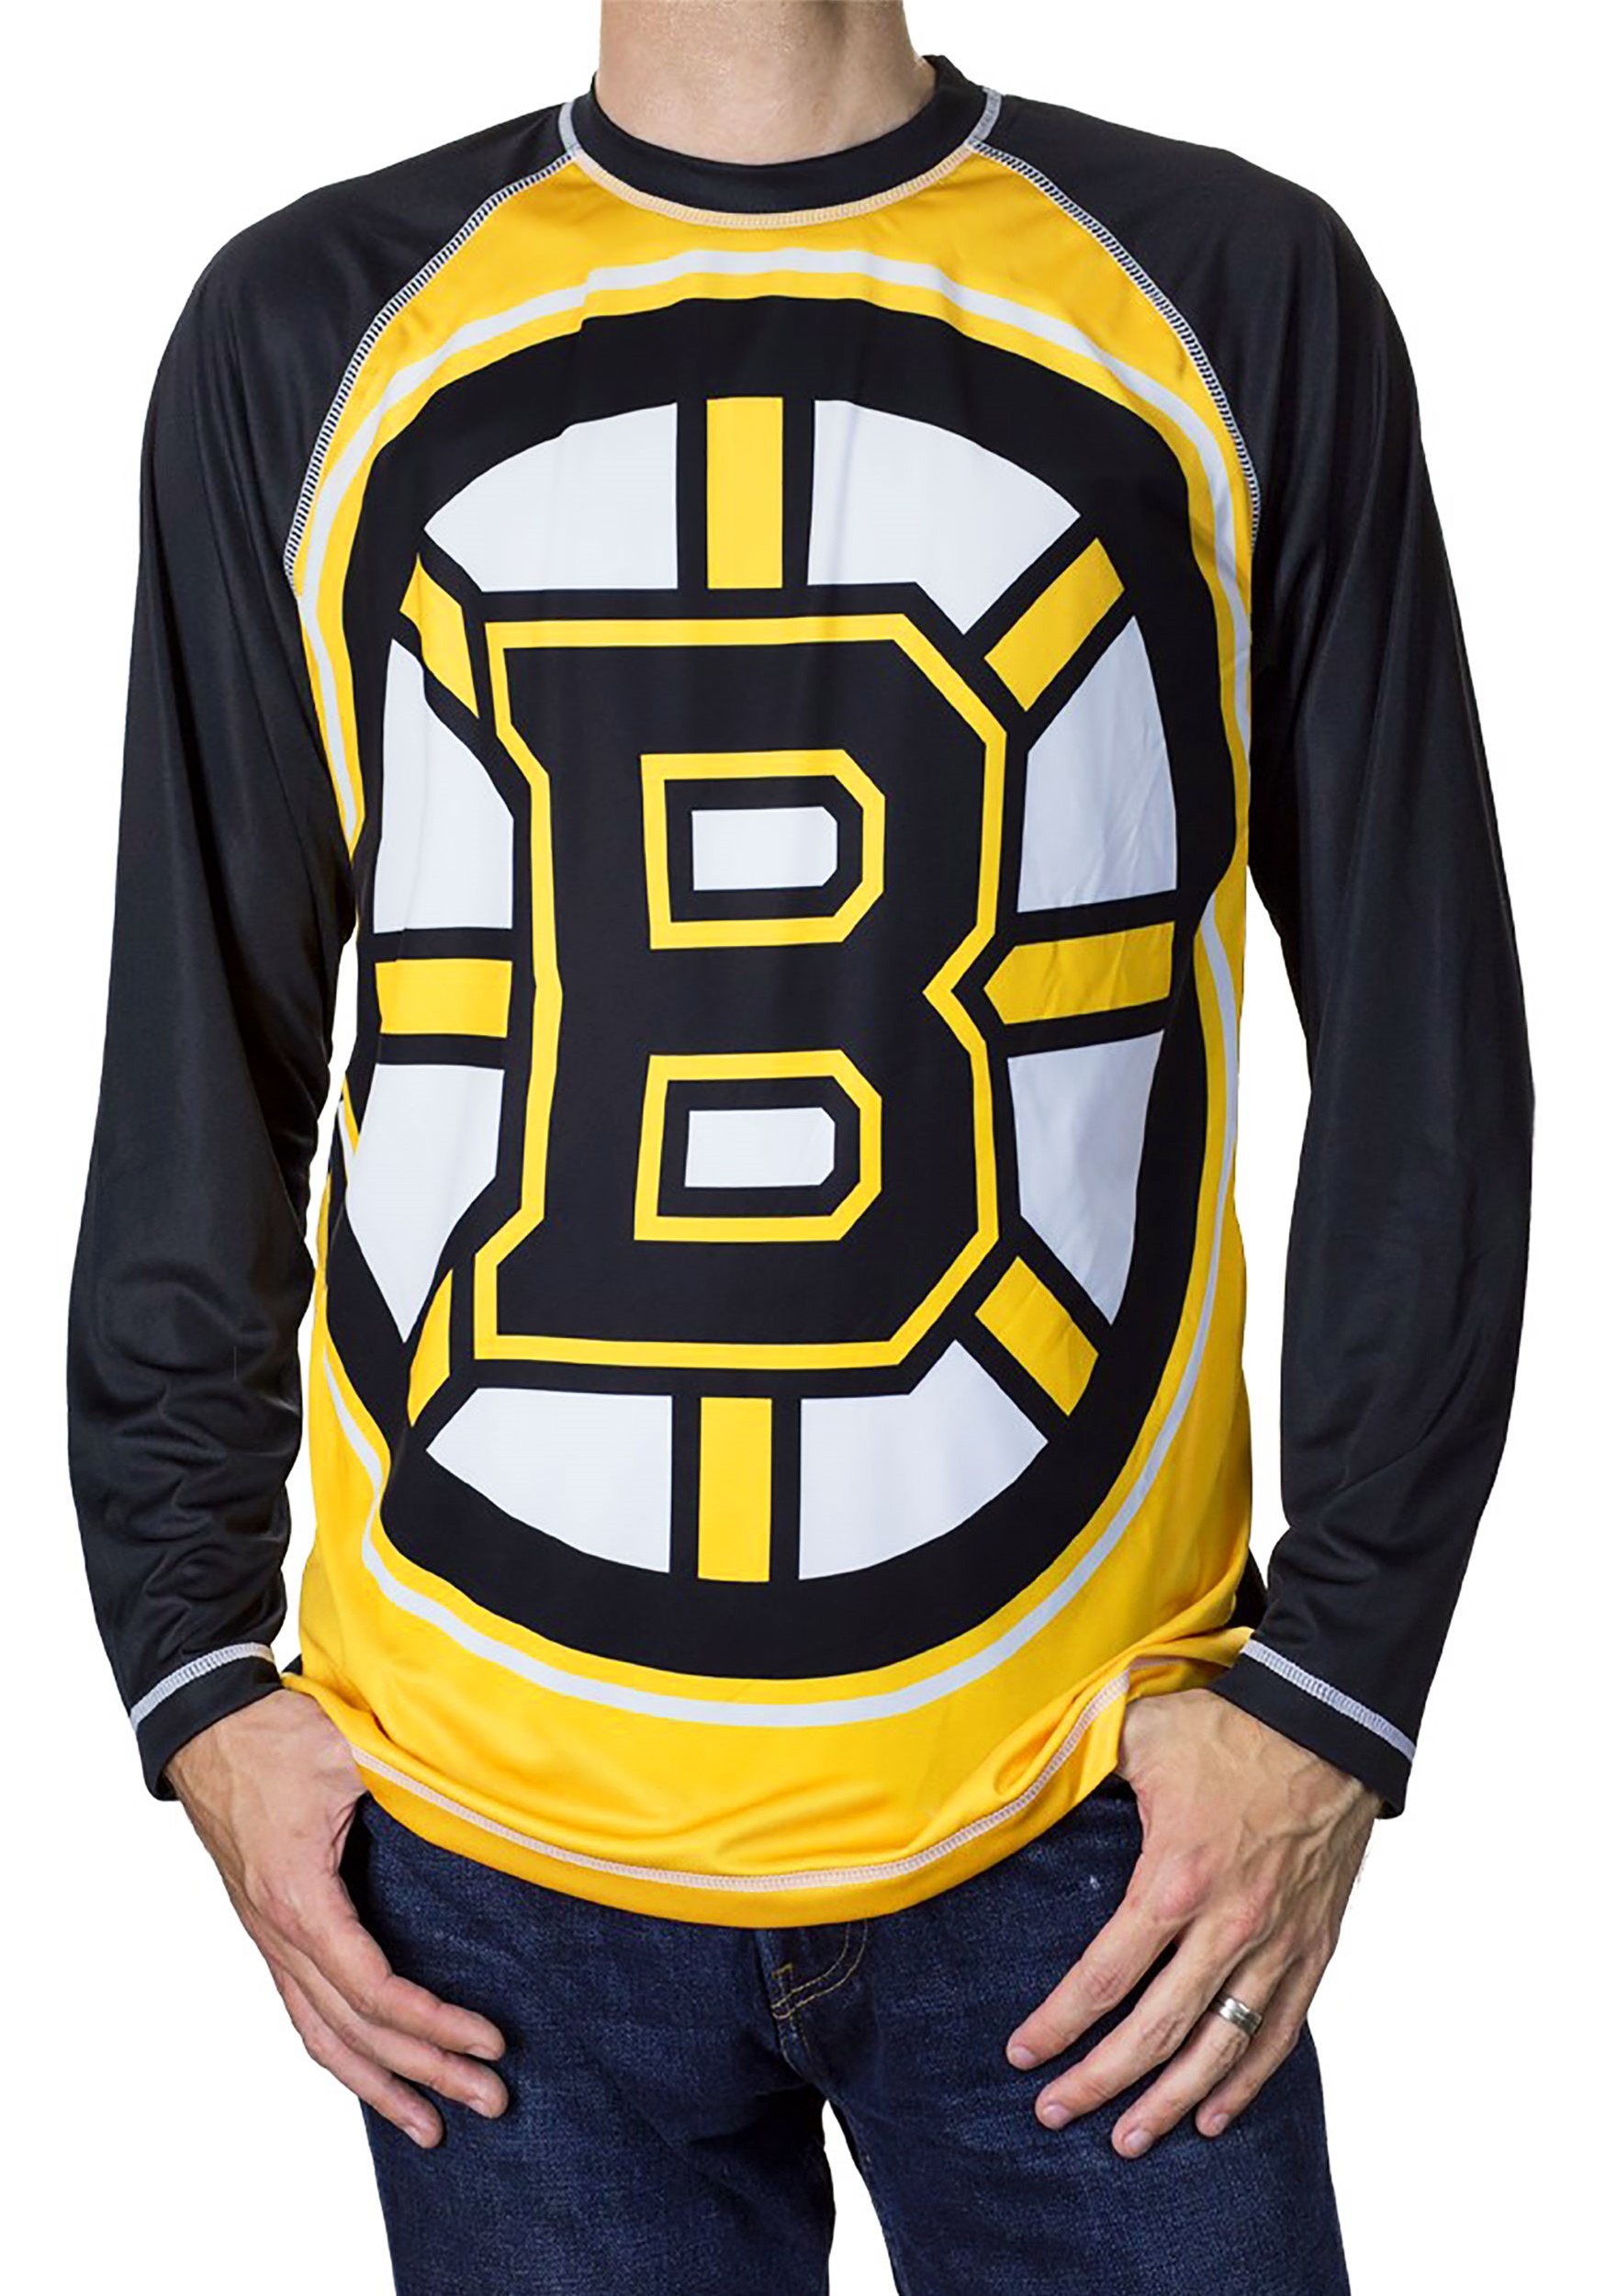 NHL Boston Bruins Men's Long Sleeve Rash Guard T-Shirt - image 1 of 1